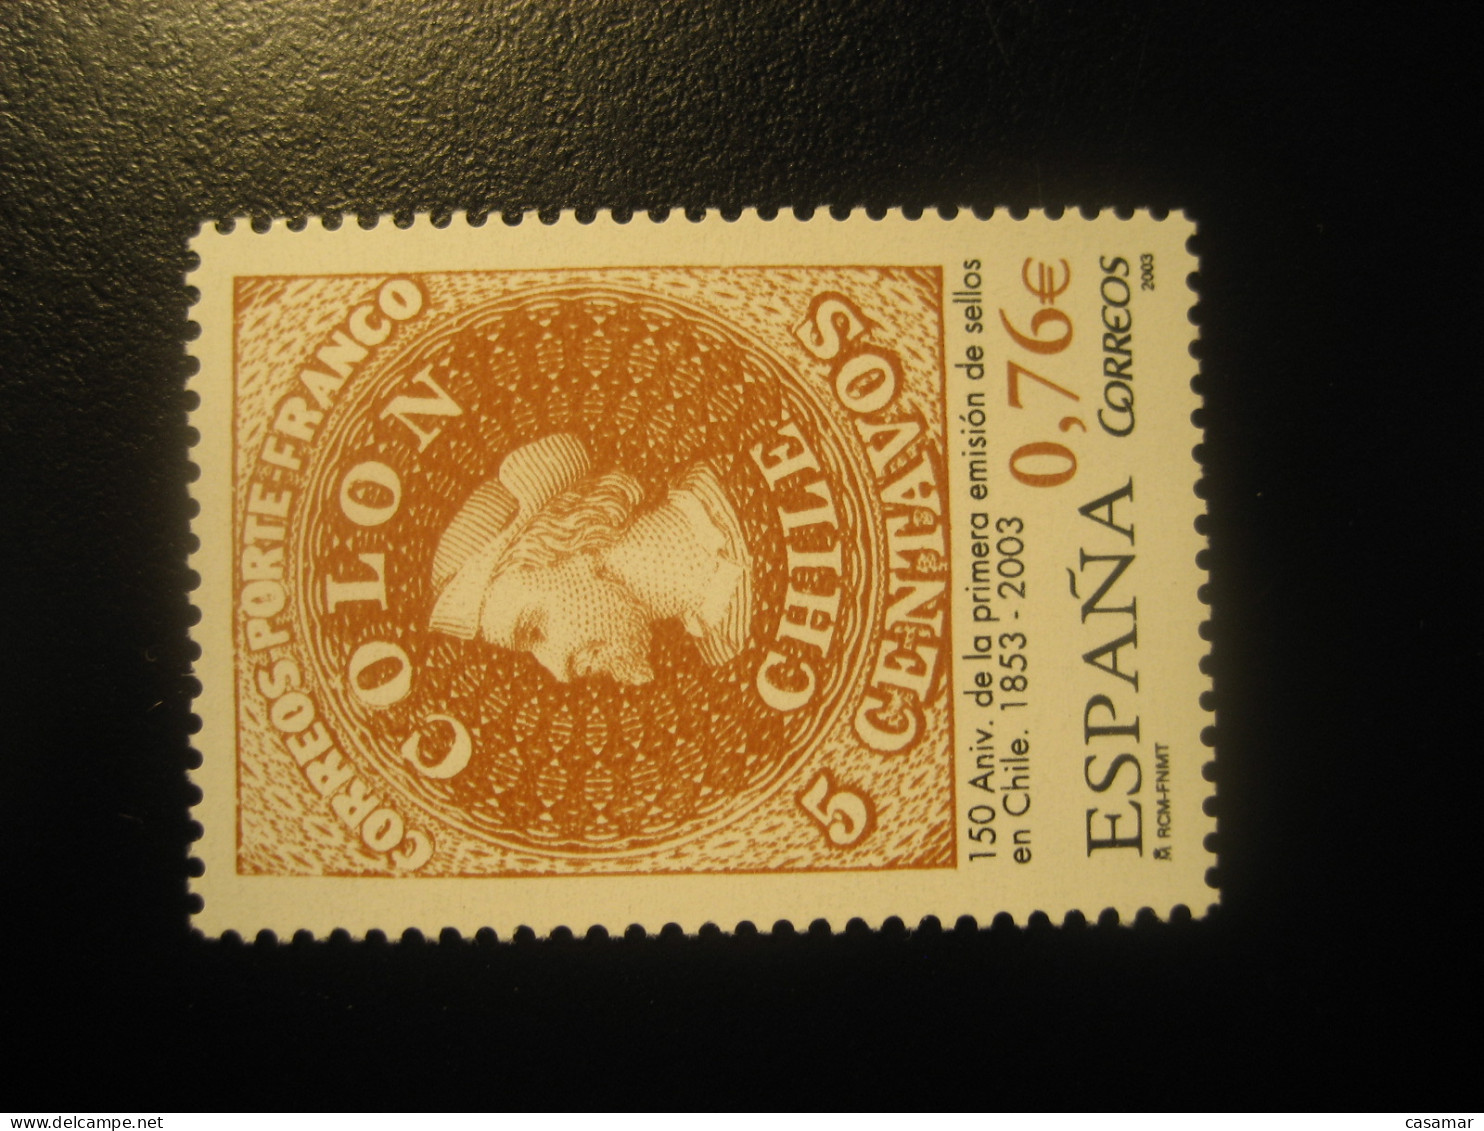 Edifil 3997 ** Unhinged Stamp 2003 CRISTOBAL COLON Chile America Discover Stamp On Stamp SPAIN - Cristóbal Colón